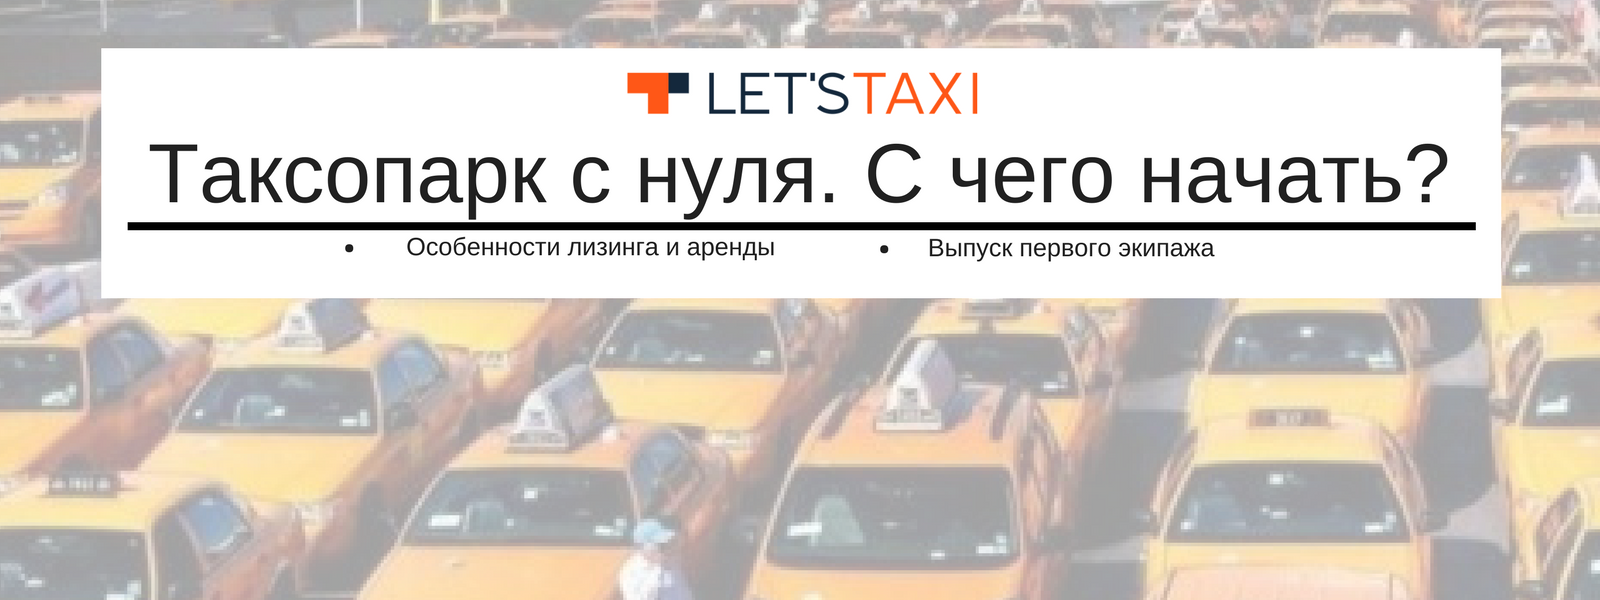 Let`s taxi таксопарк с нуля